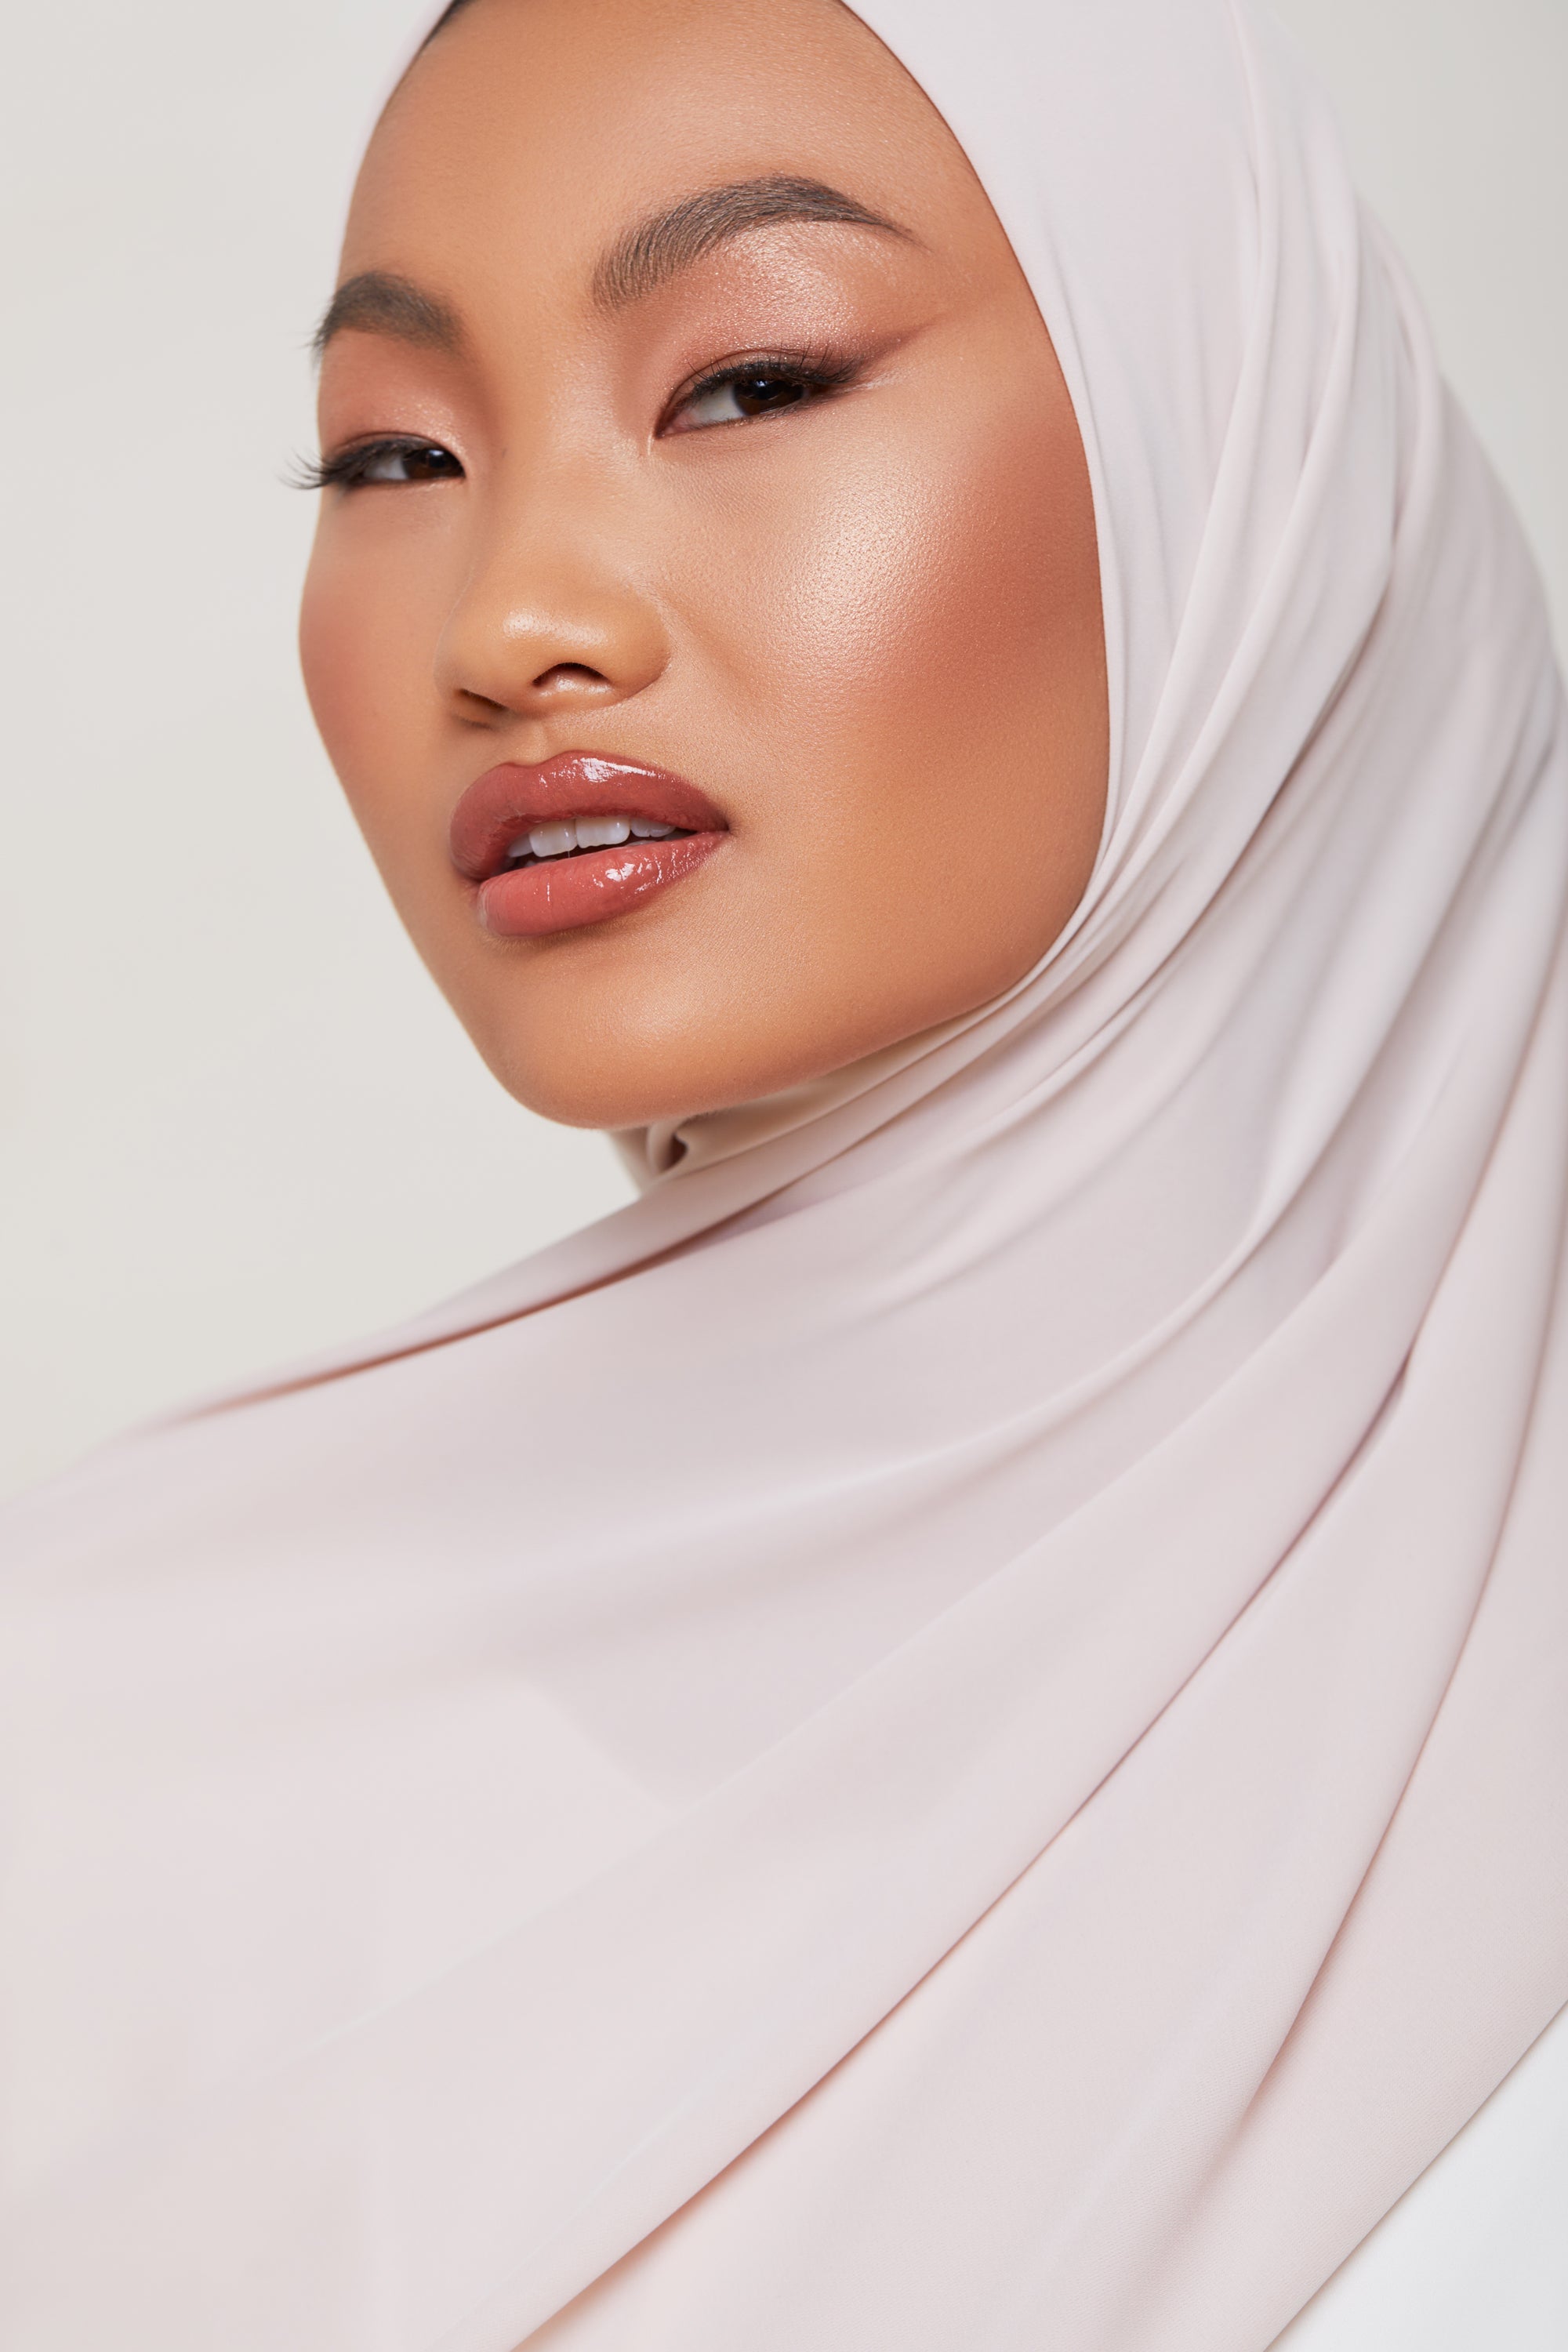 Medina Silk Hijab - Desert saigonodysseyhotel 